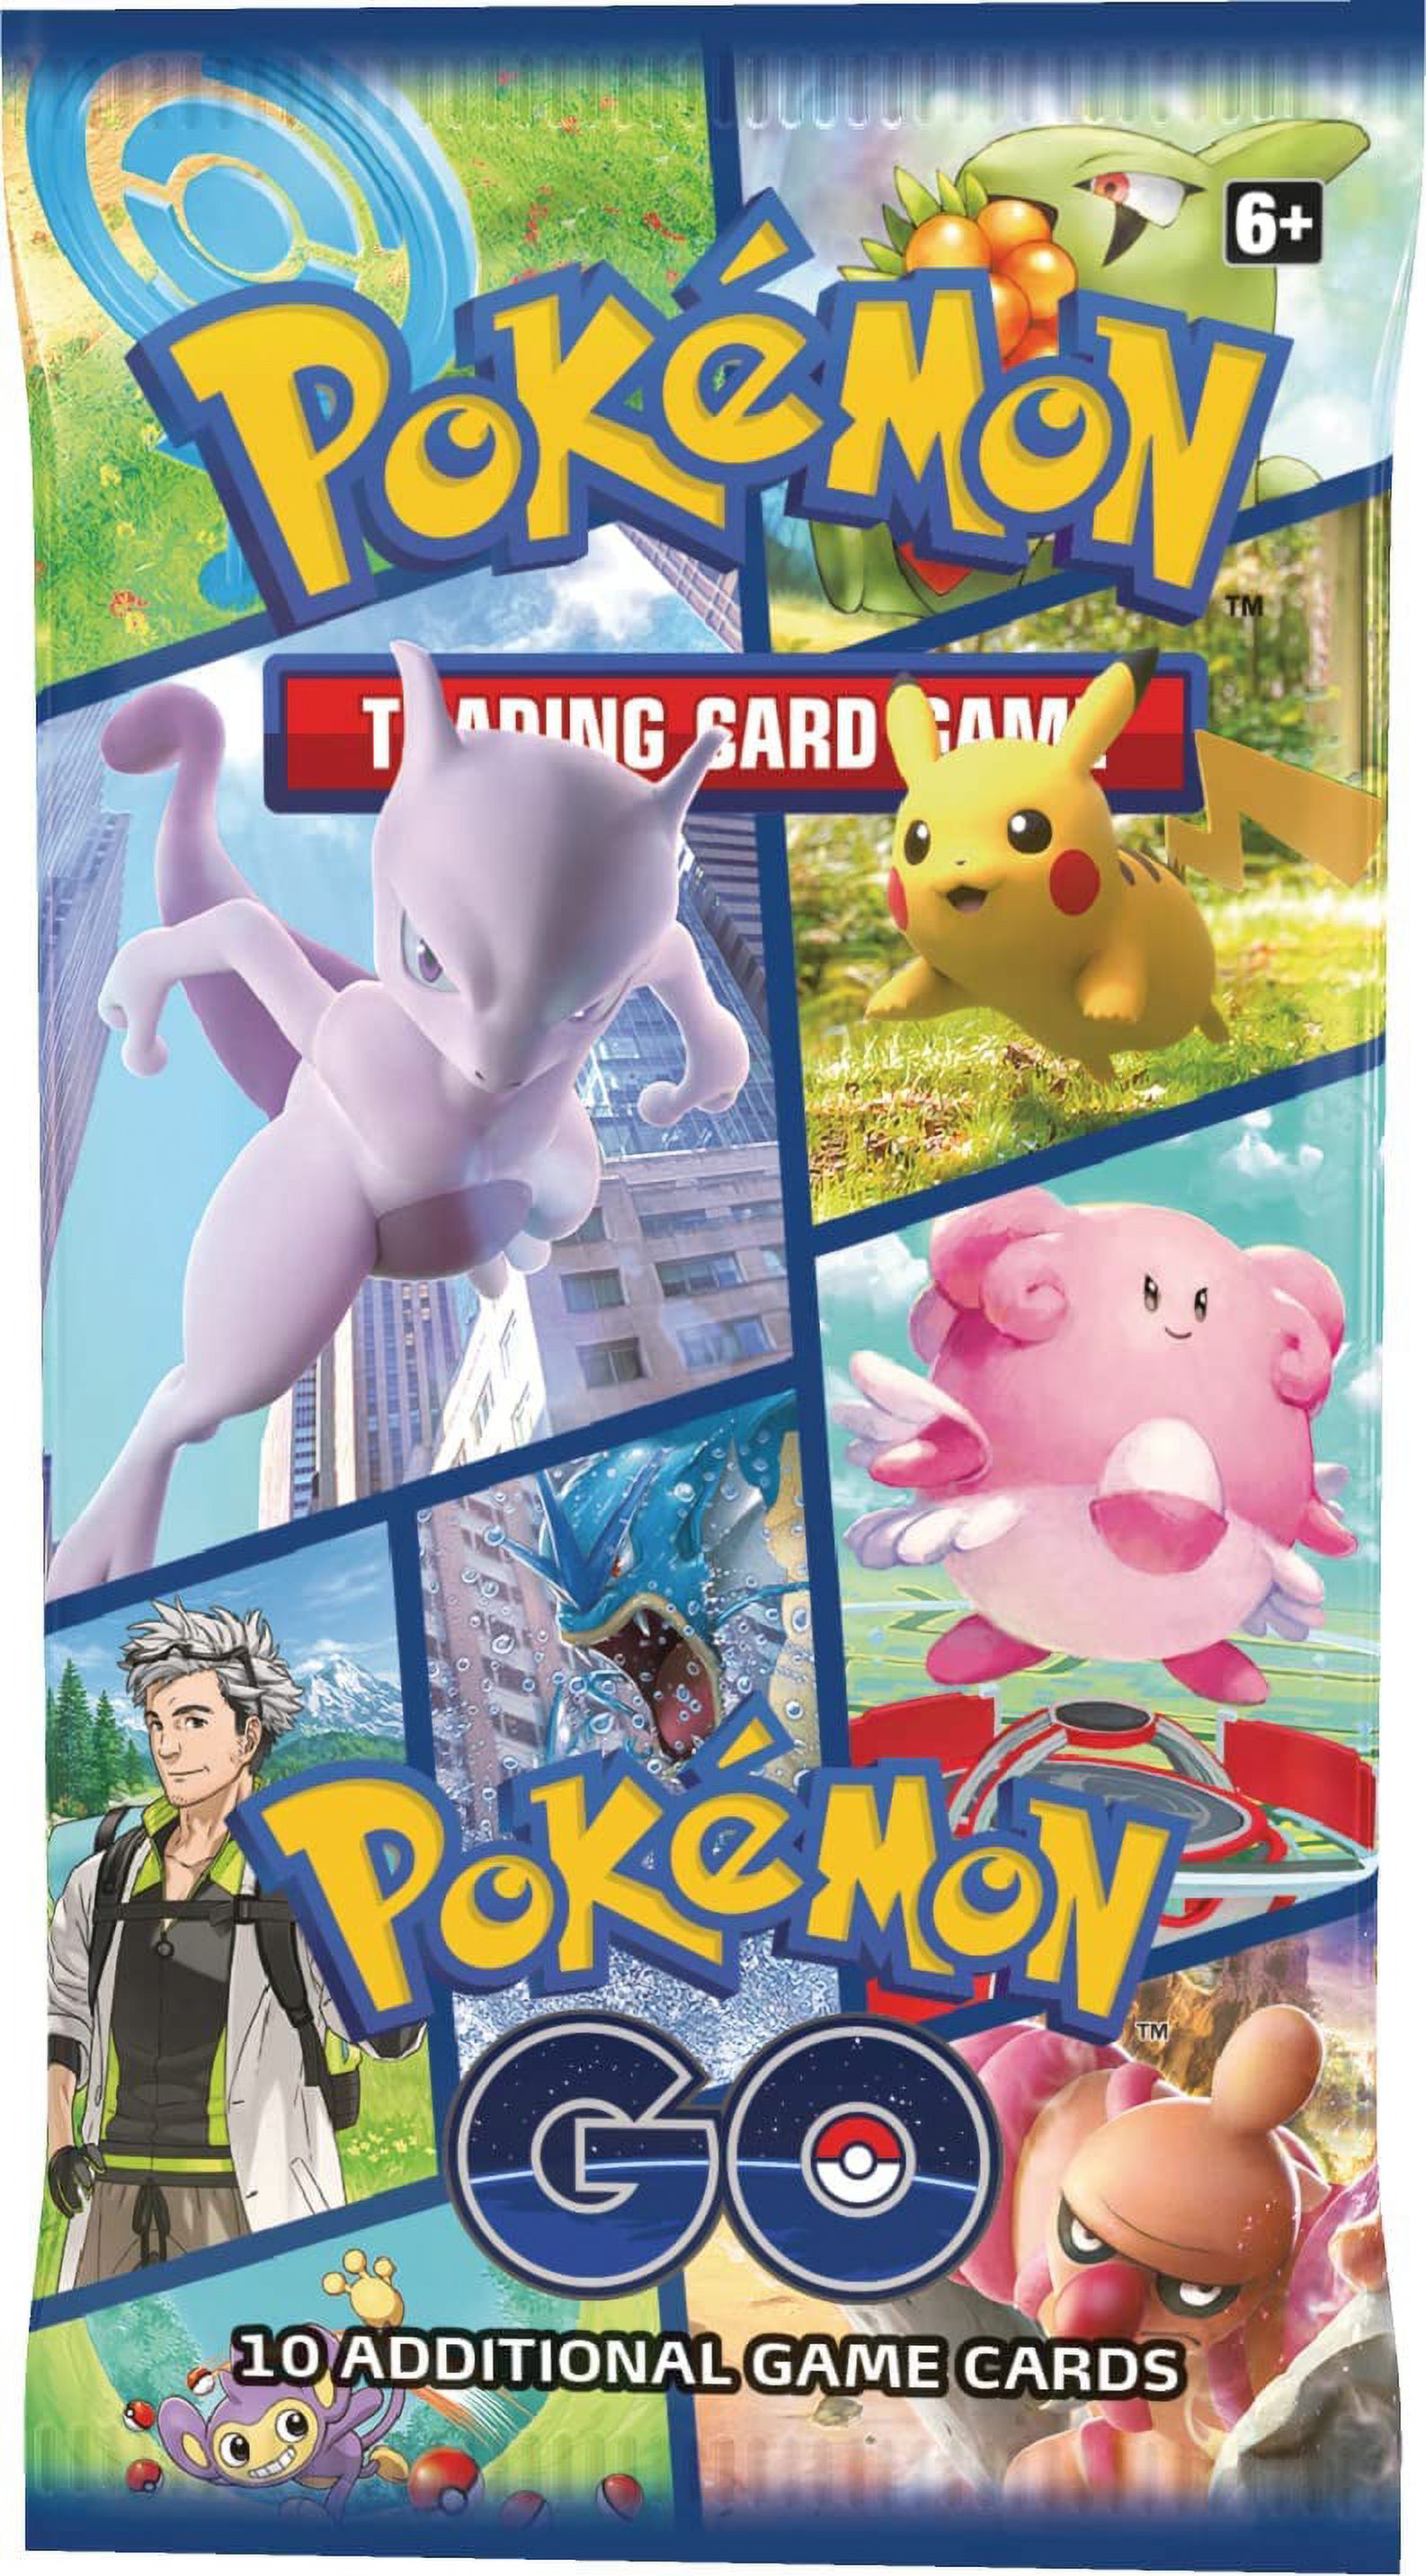 Pokémon Trading Card Game: Pokémon Go Wave 1 Elite Trainer Box - image 4 of 6